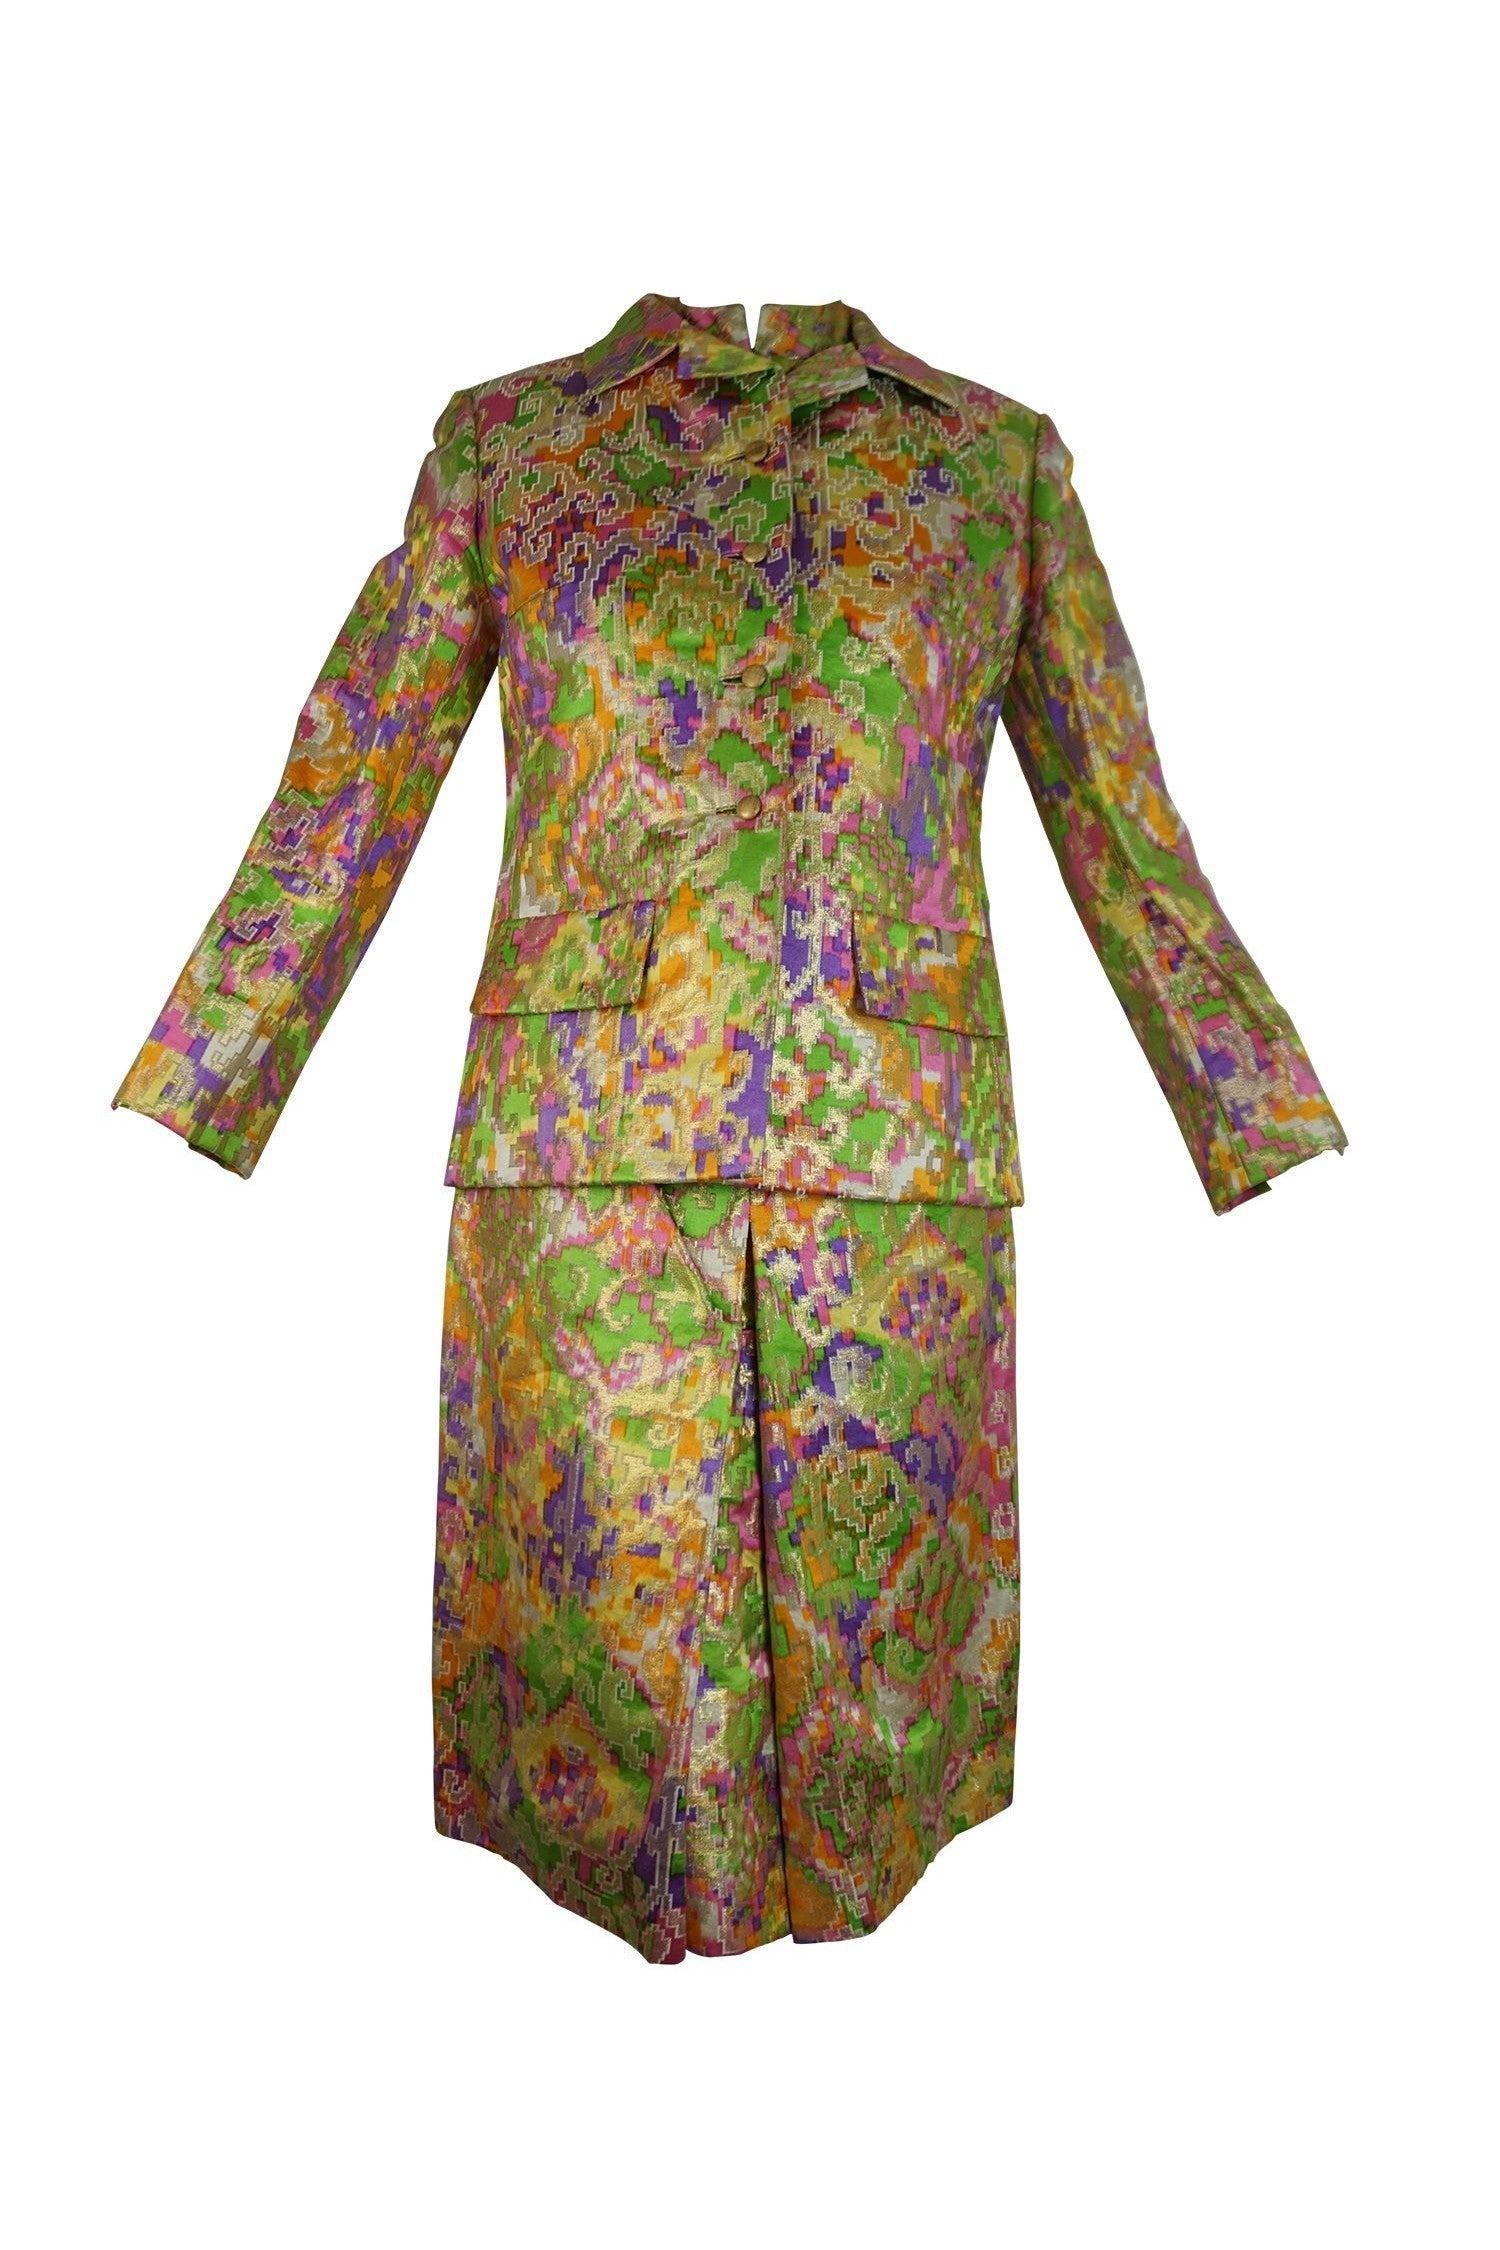 Christian Dior NY Brocade Skirt Jacket Vest 1960's - Foxy Couture Carmel